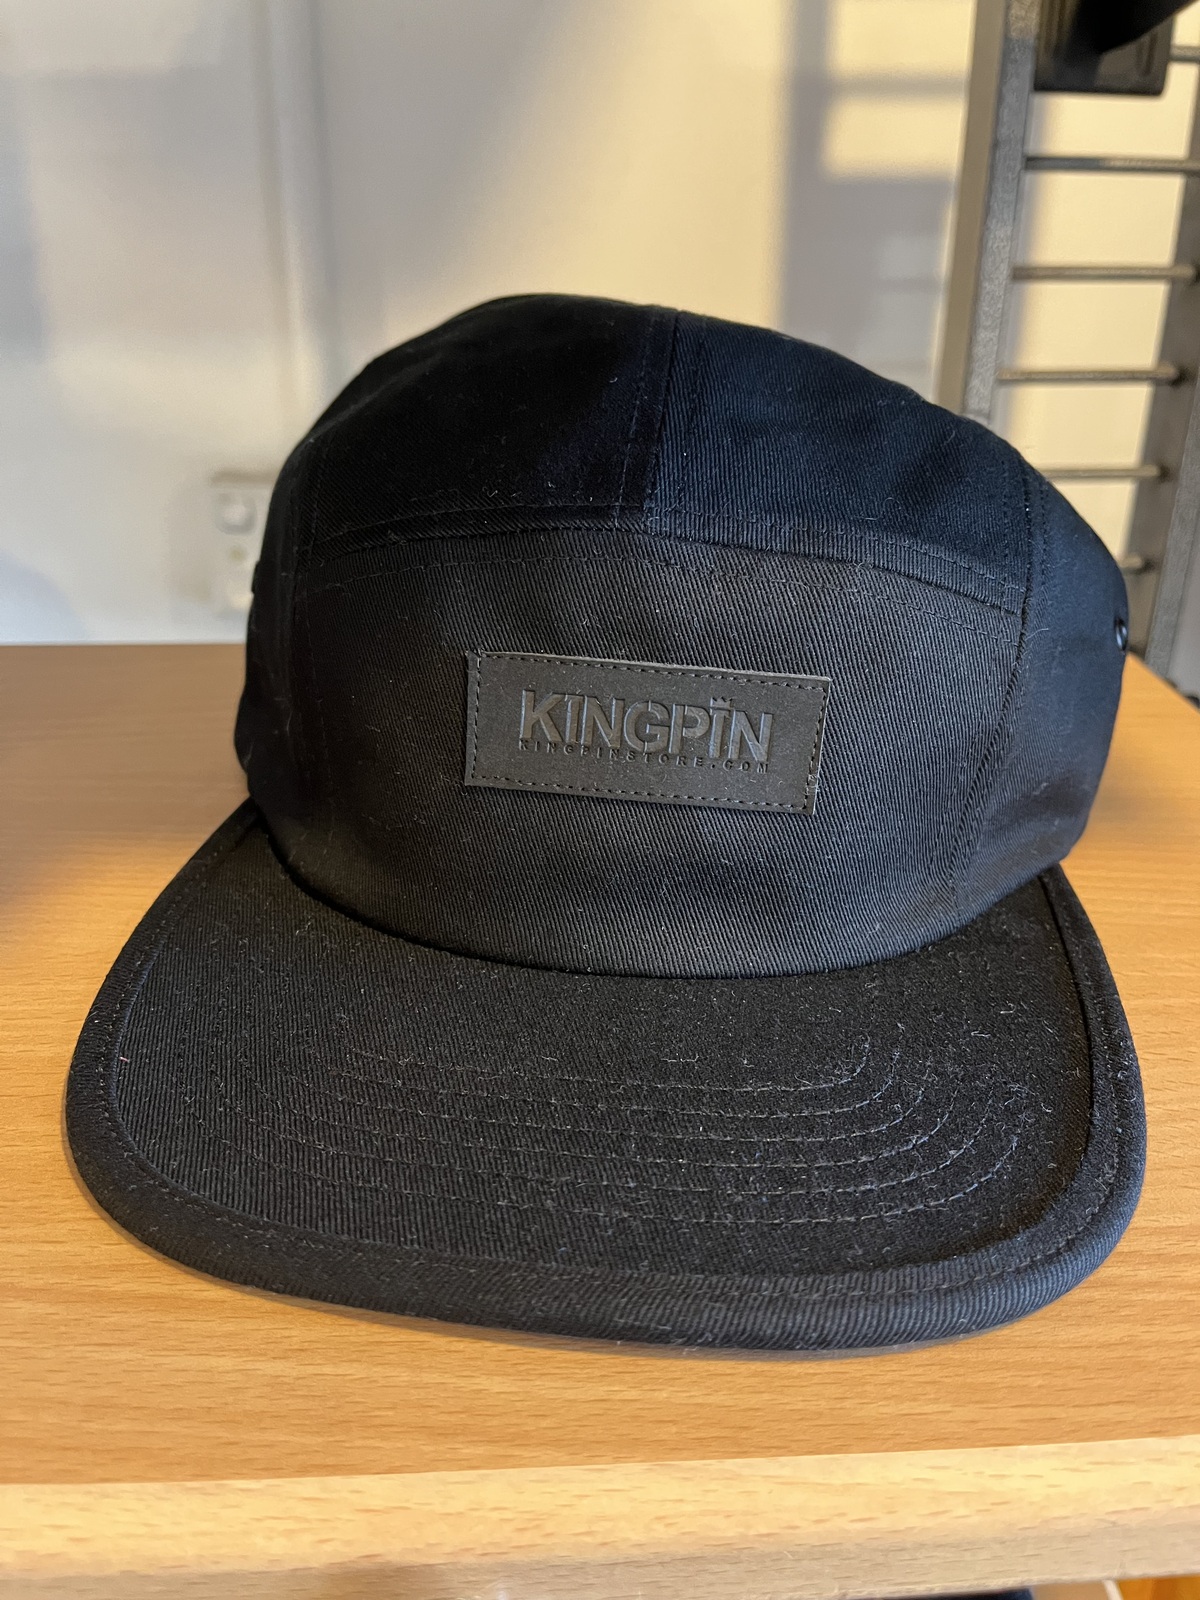 KINGPIN 5 PANEL CAP Black AUST HAT HATS CAPS kingpinstore - KINGPIN ...